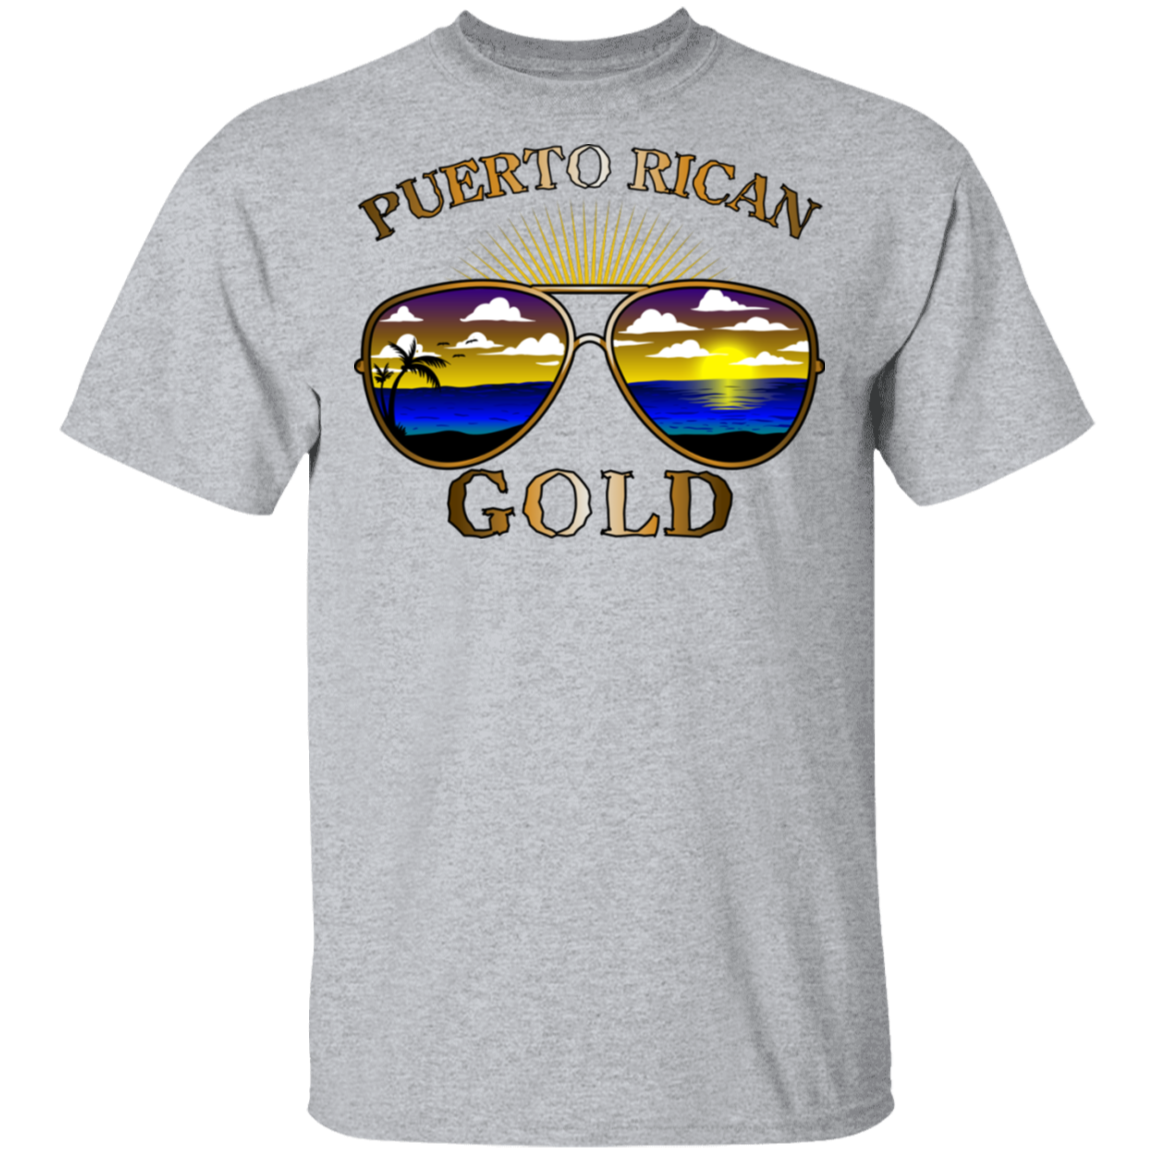 Puerto Rican Gold 5.3 oz. T-Shirt